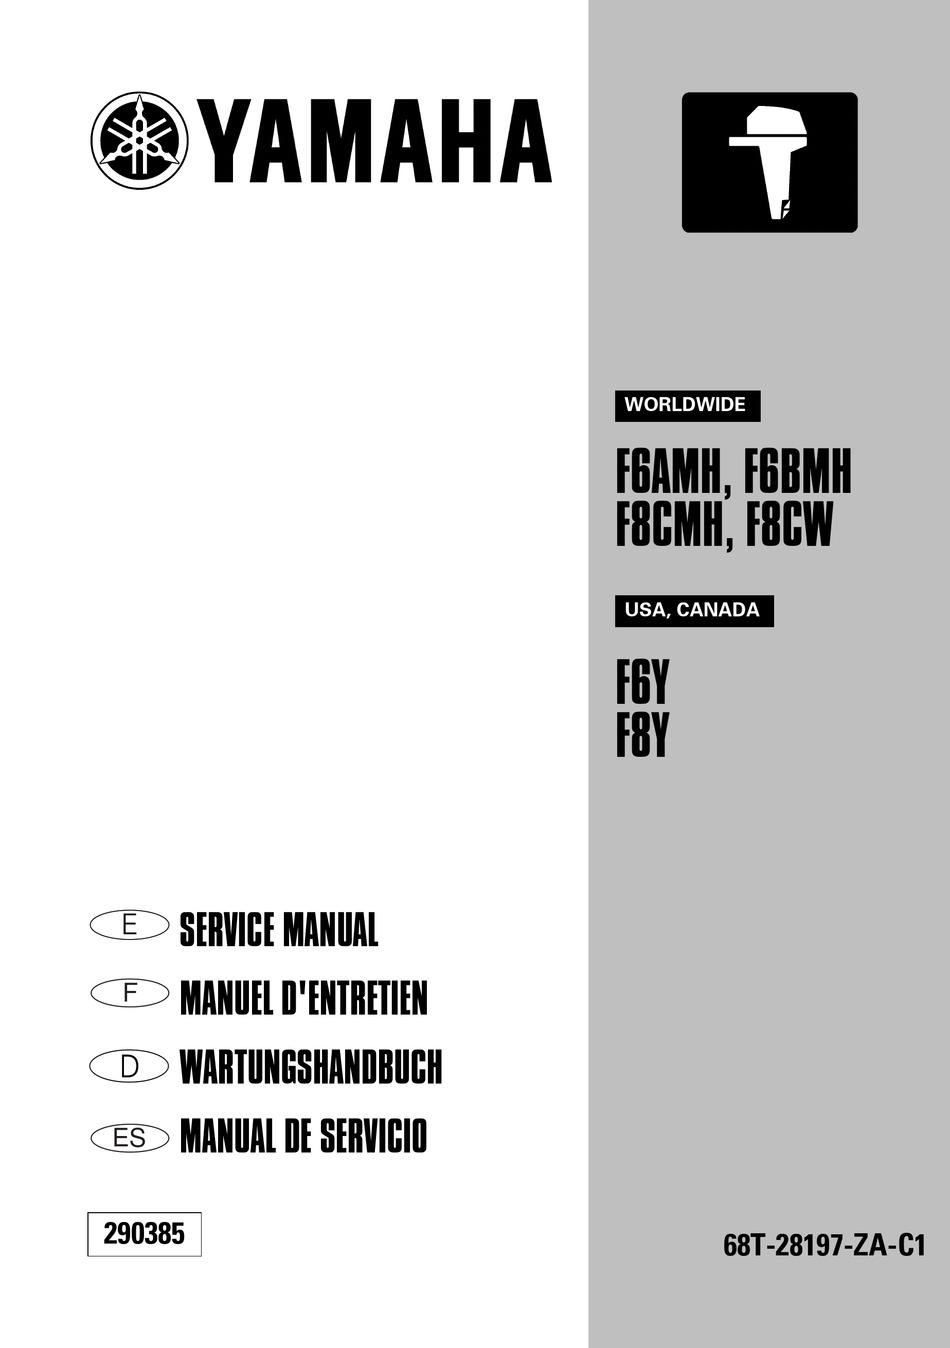 Yamaha F6amh Service Manual Pdf